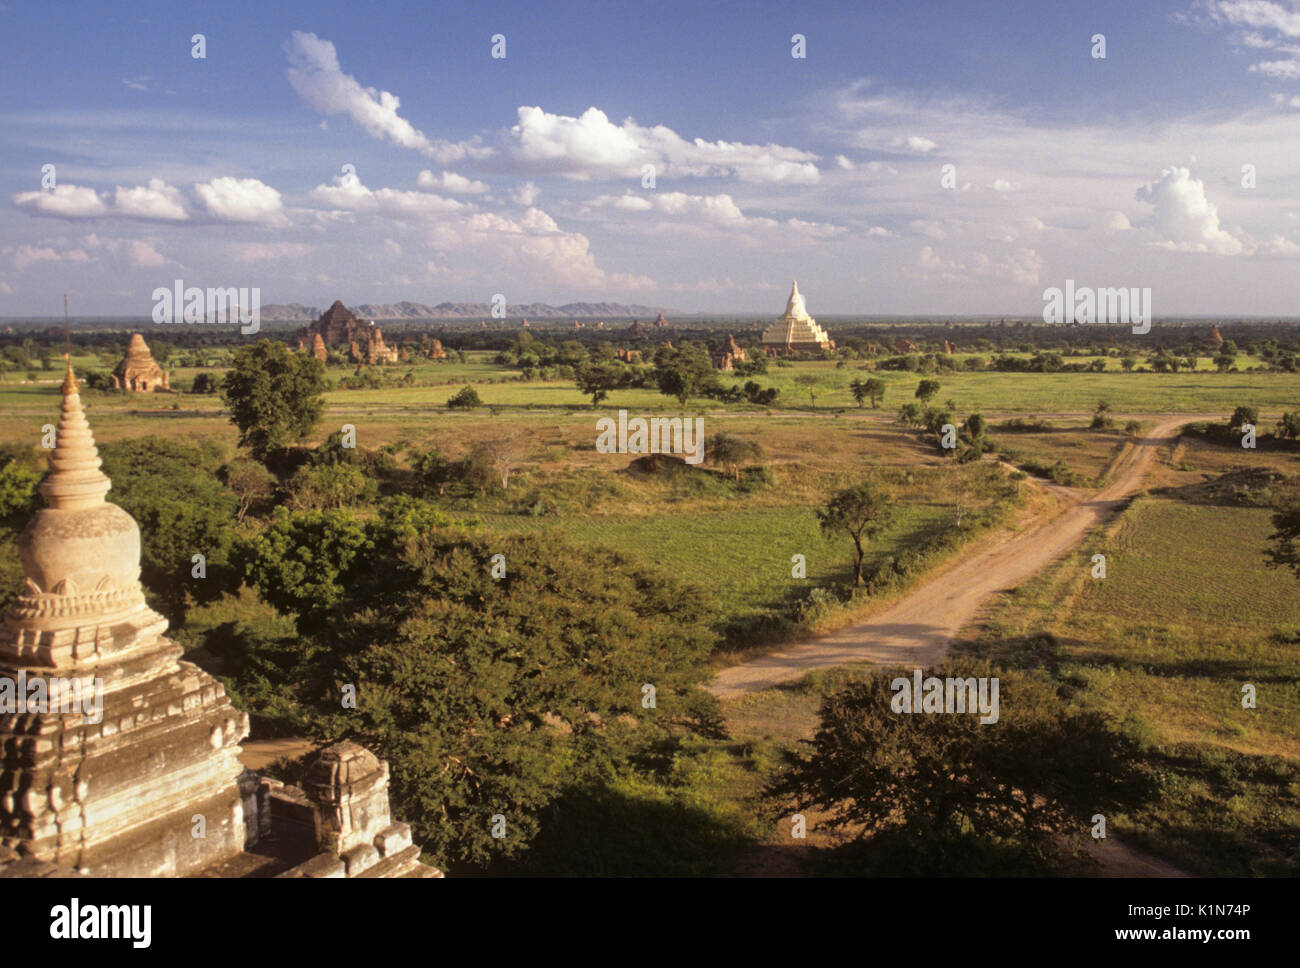 Temples and pagodas on the plain, Pagan (Bagan), Burma (Myanmar) Stock Photo